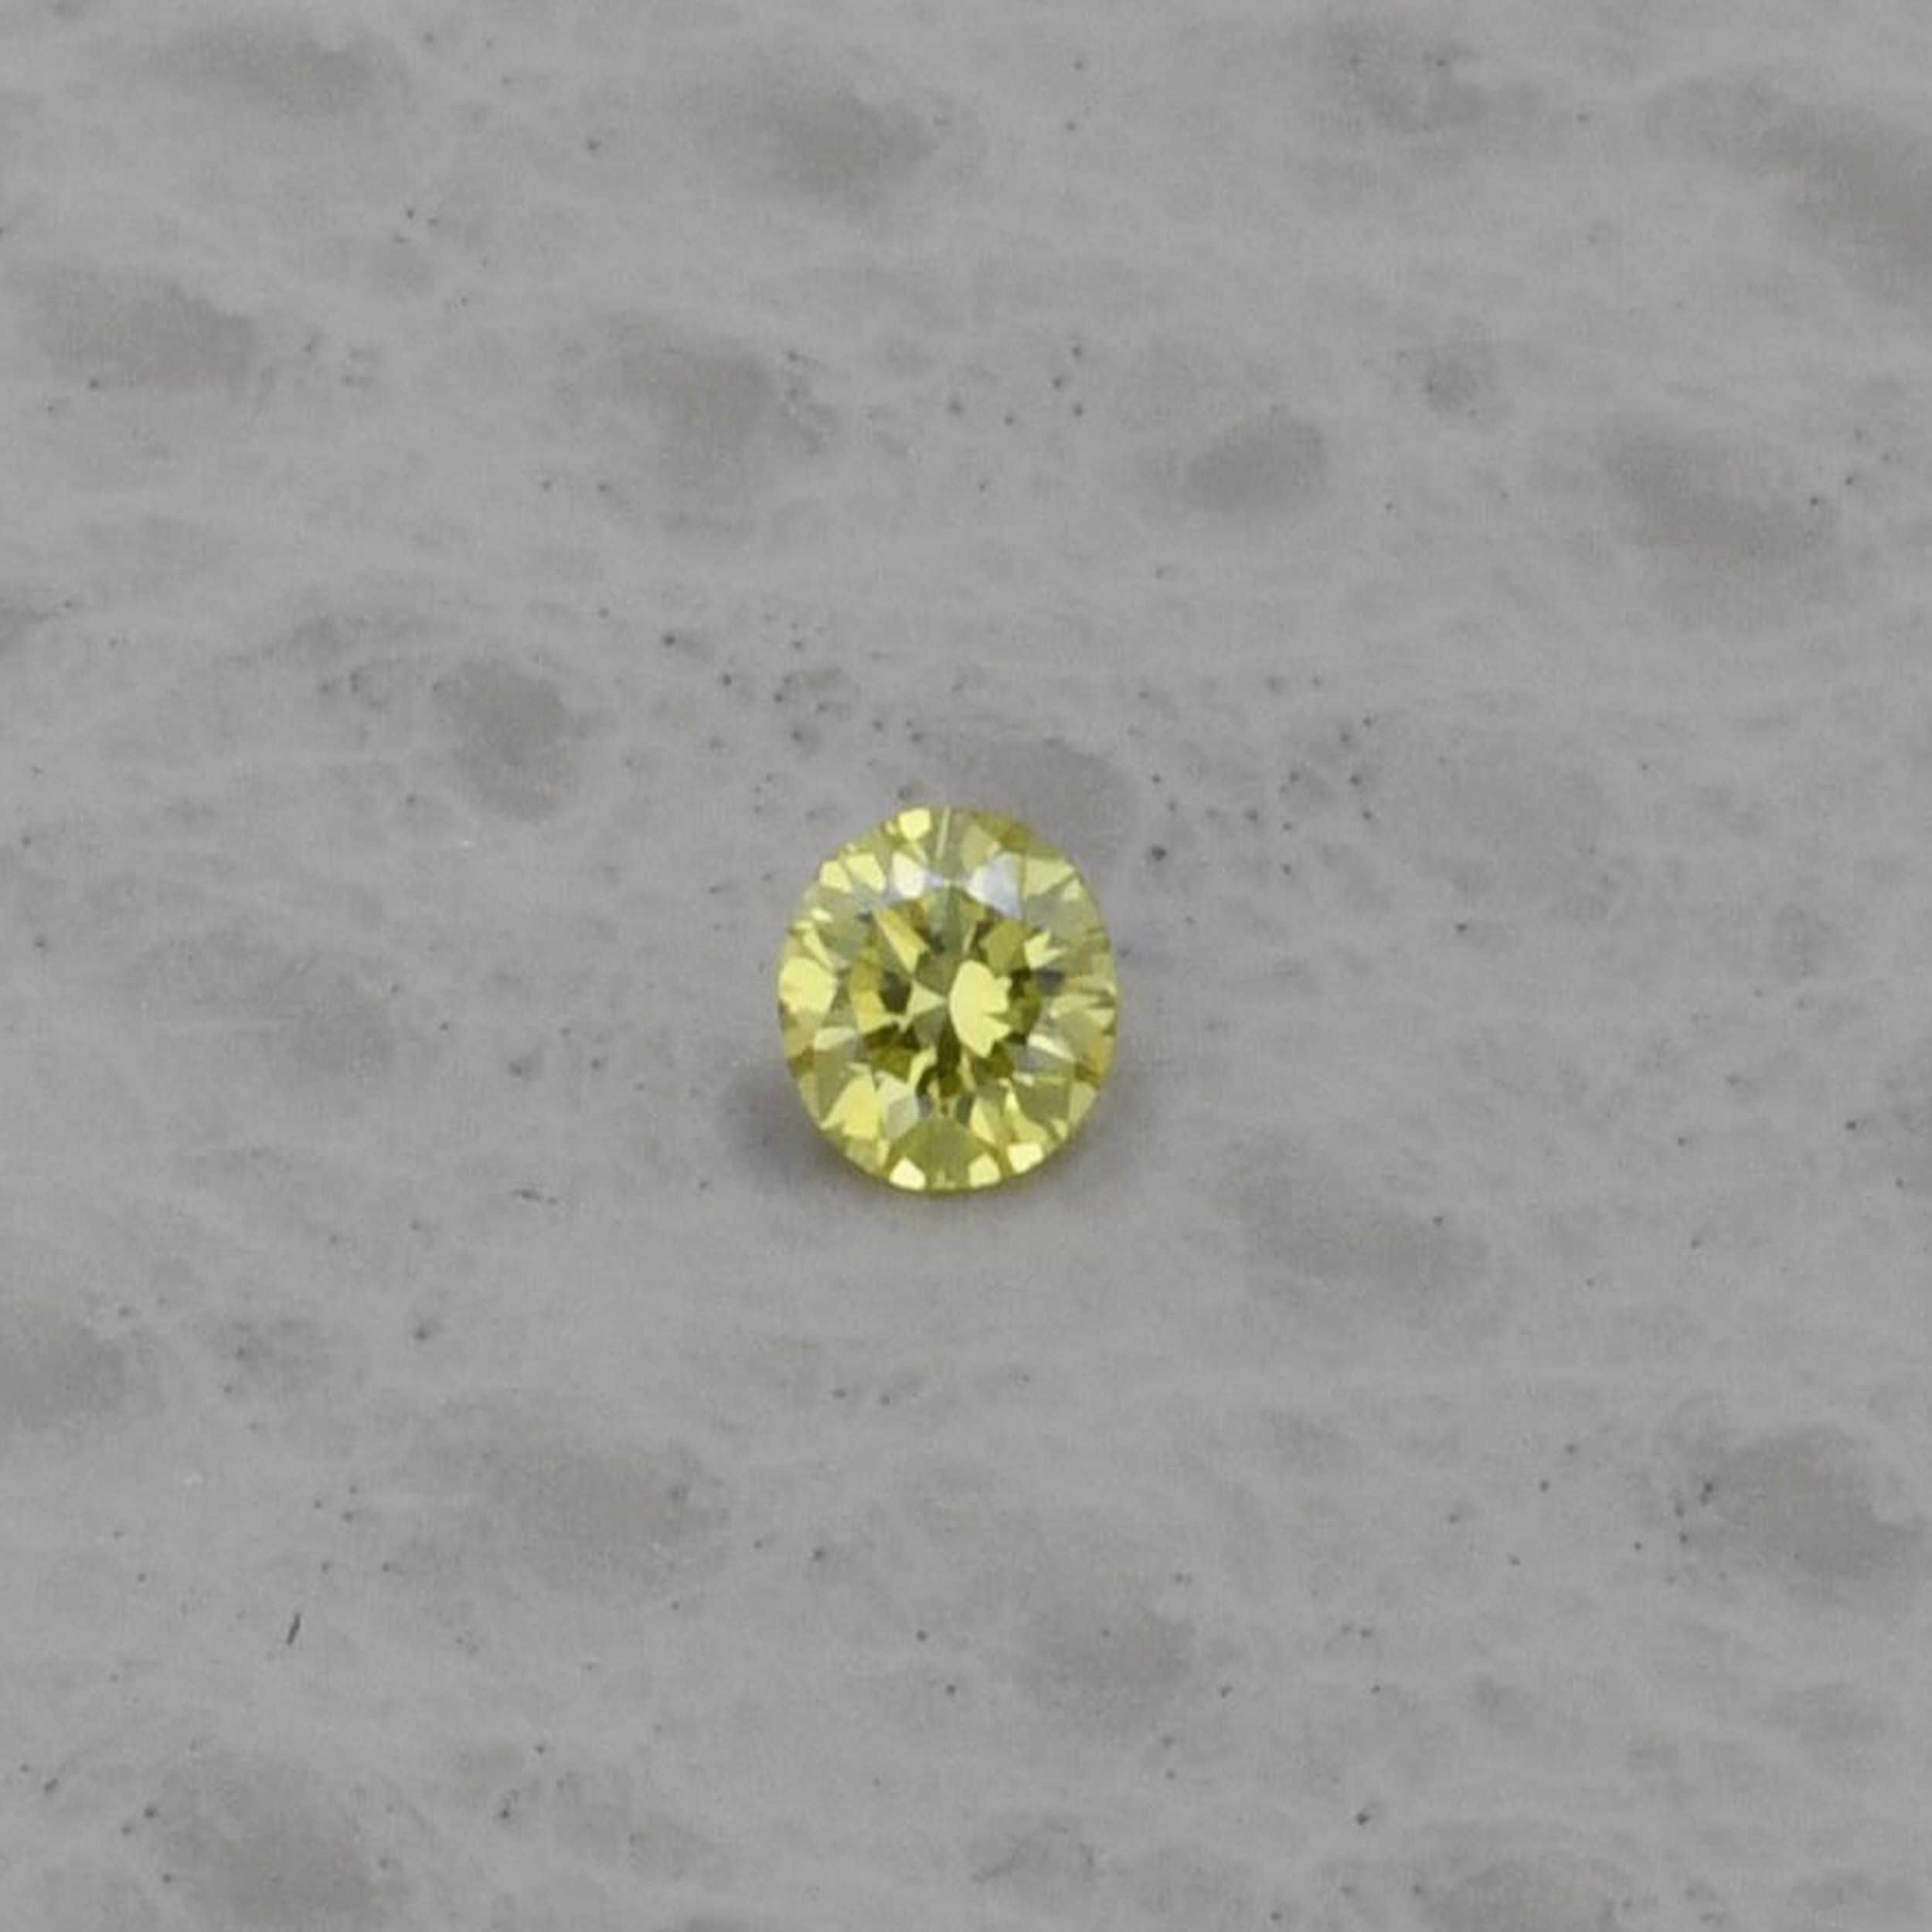 Diamante nemontate, Fancy yellow,certificare HRD Antwerp (9199...9219)